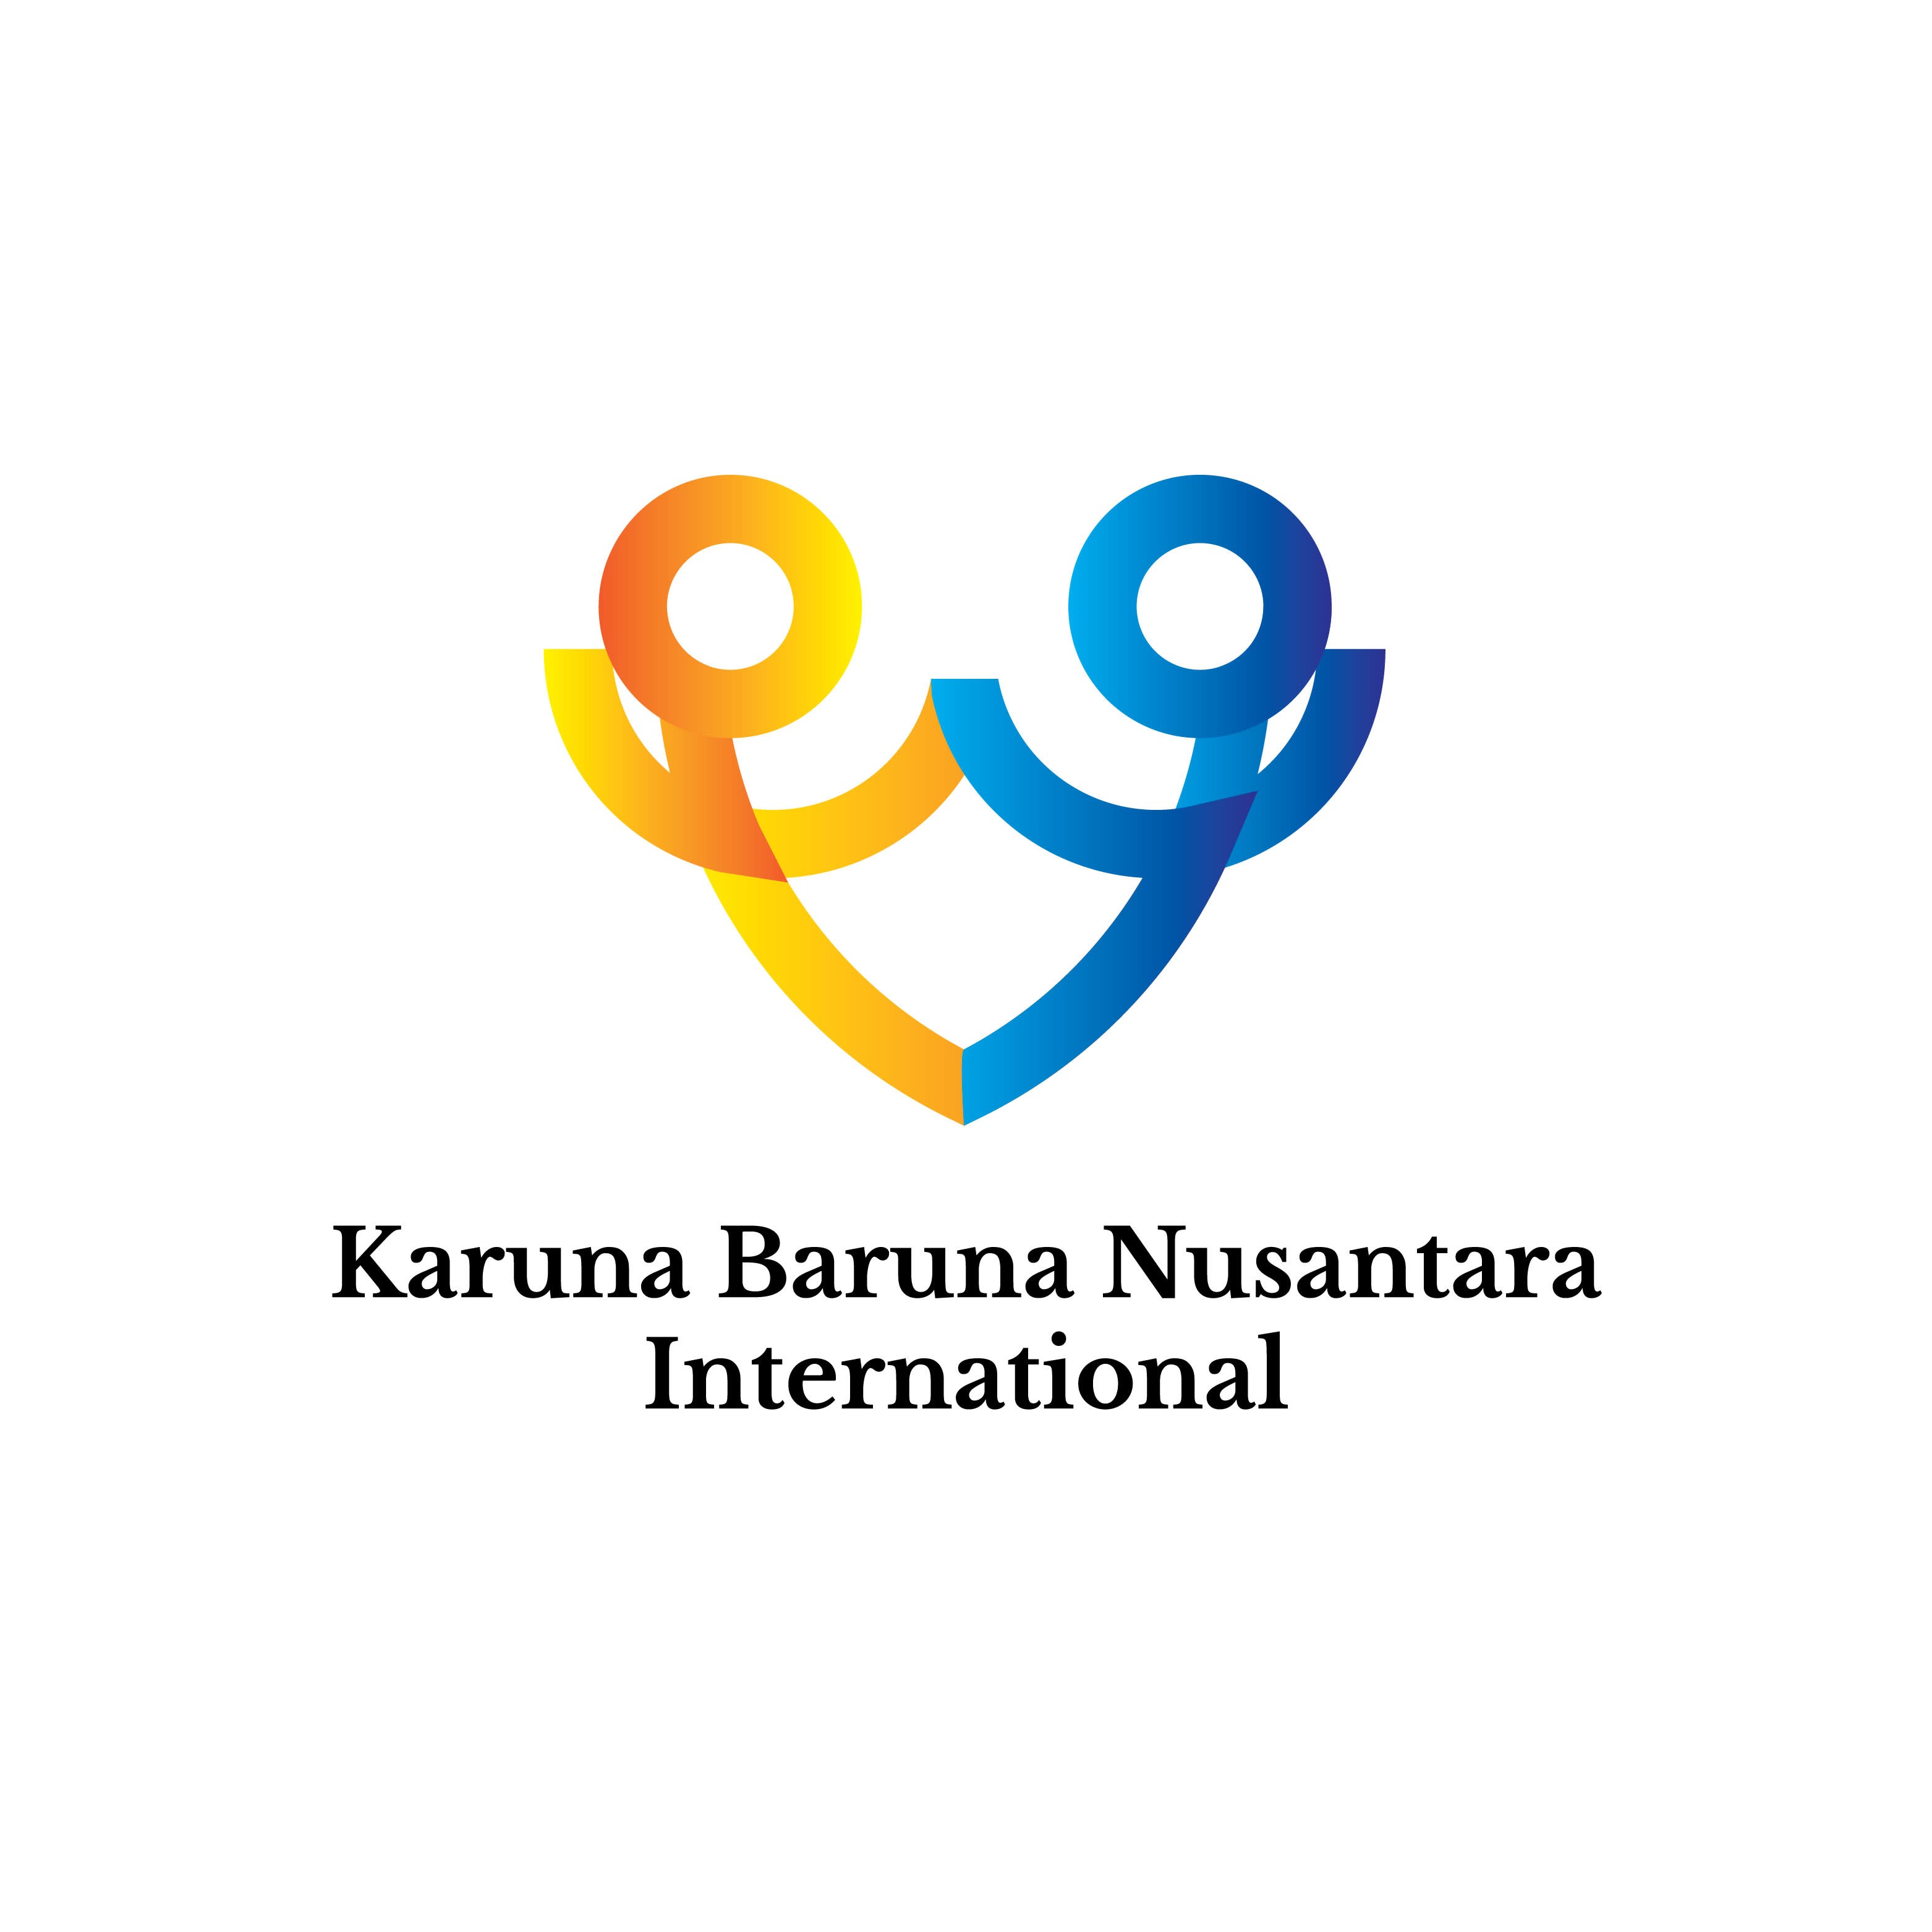 Karuna Baruna Nusantara International